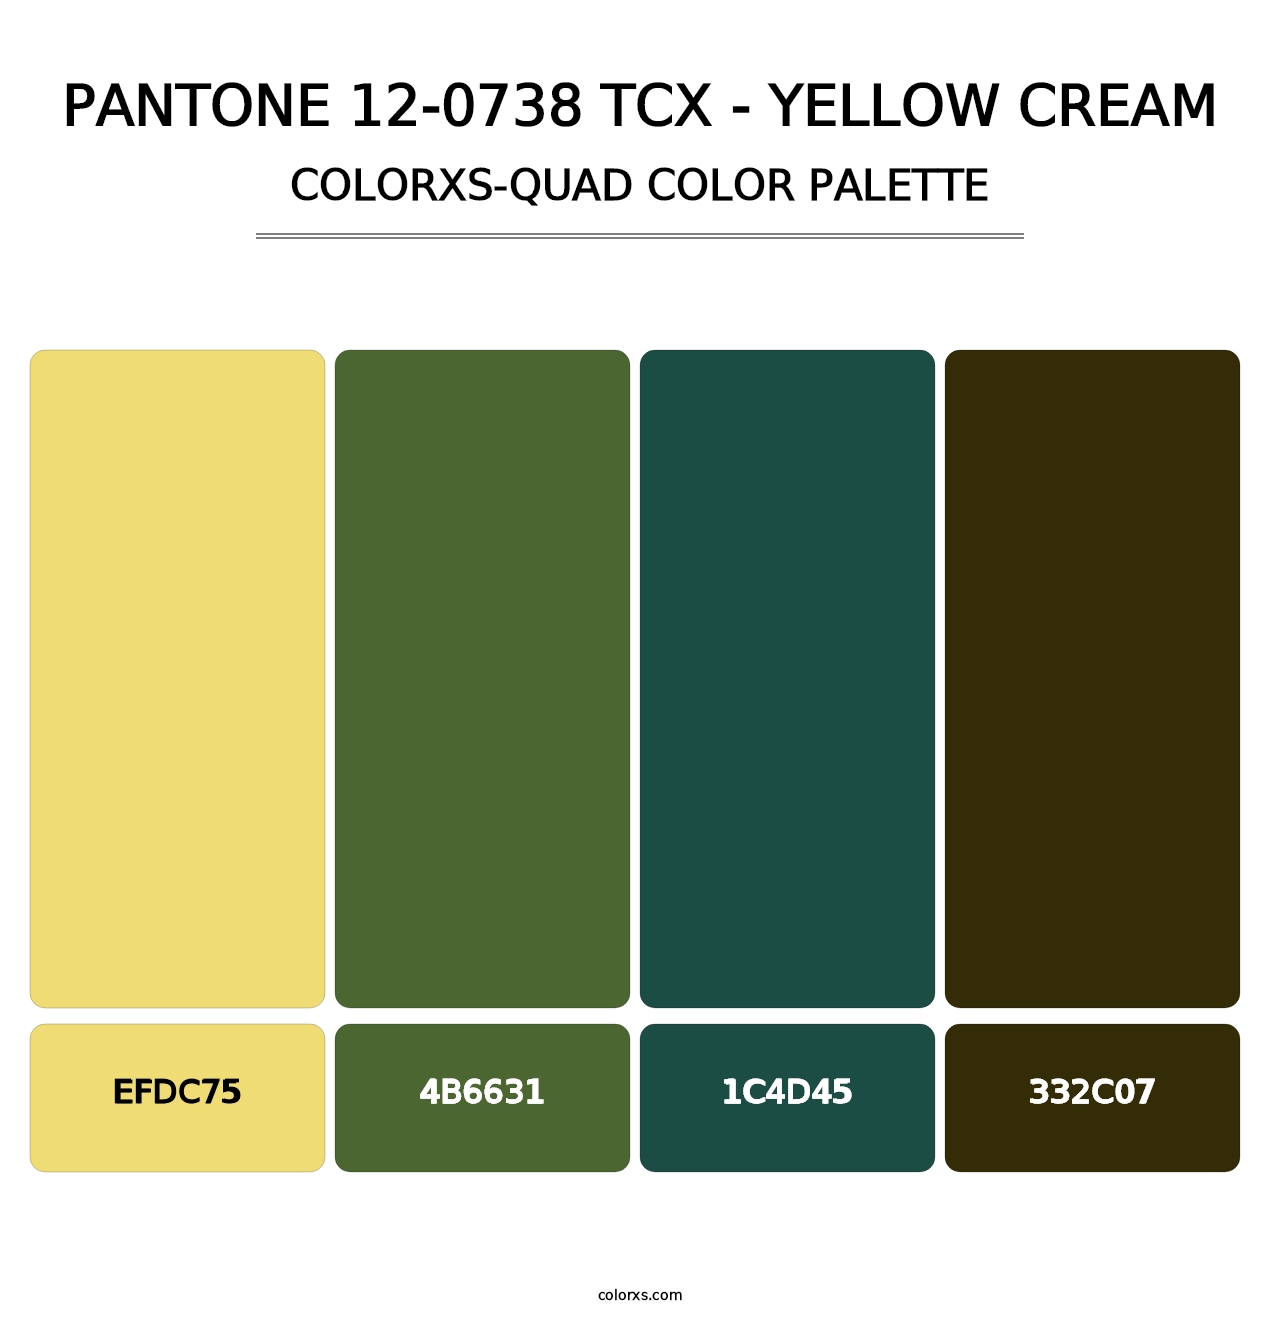 PANTONE 12-0738 TCX - Yellow Cream - Colorxs Quad Palette